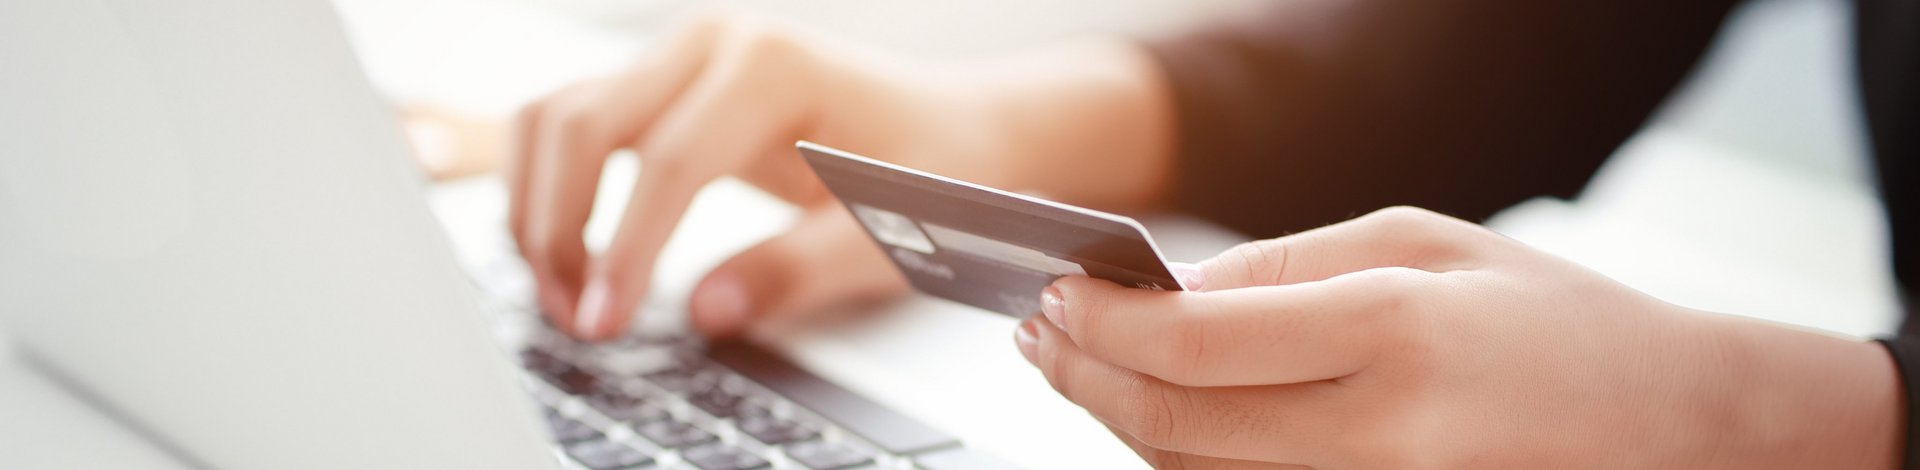 Online-Bezahlung per Kreditkarte